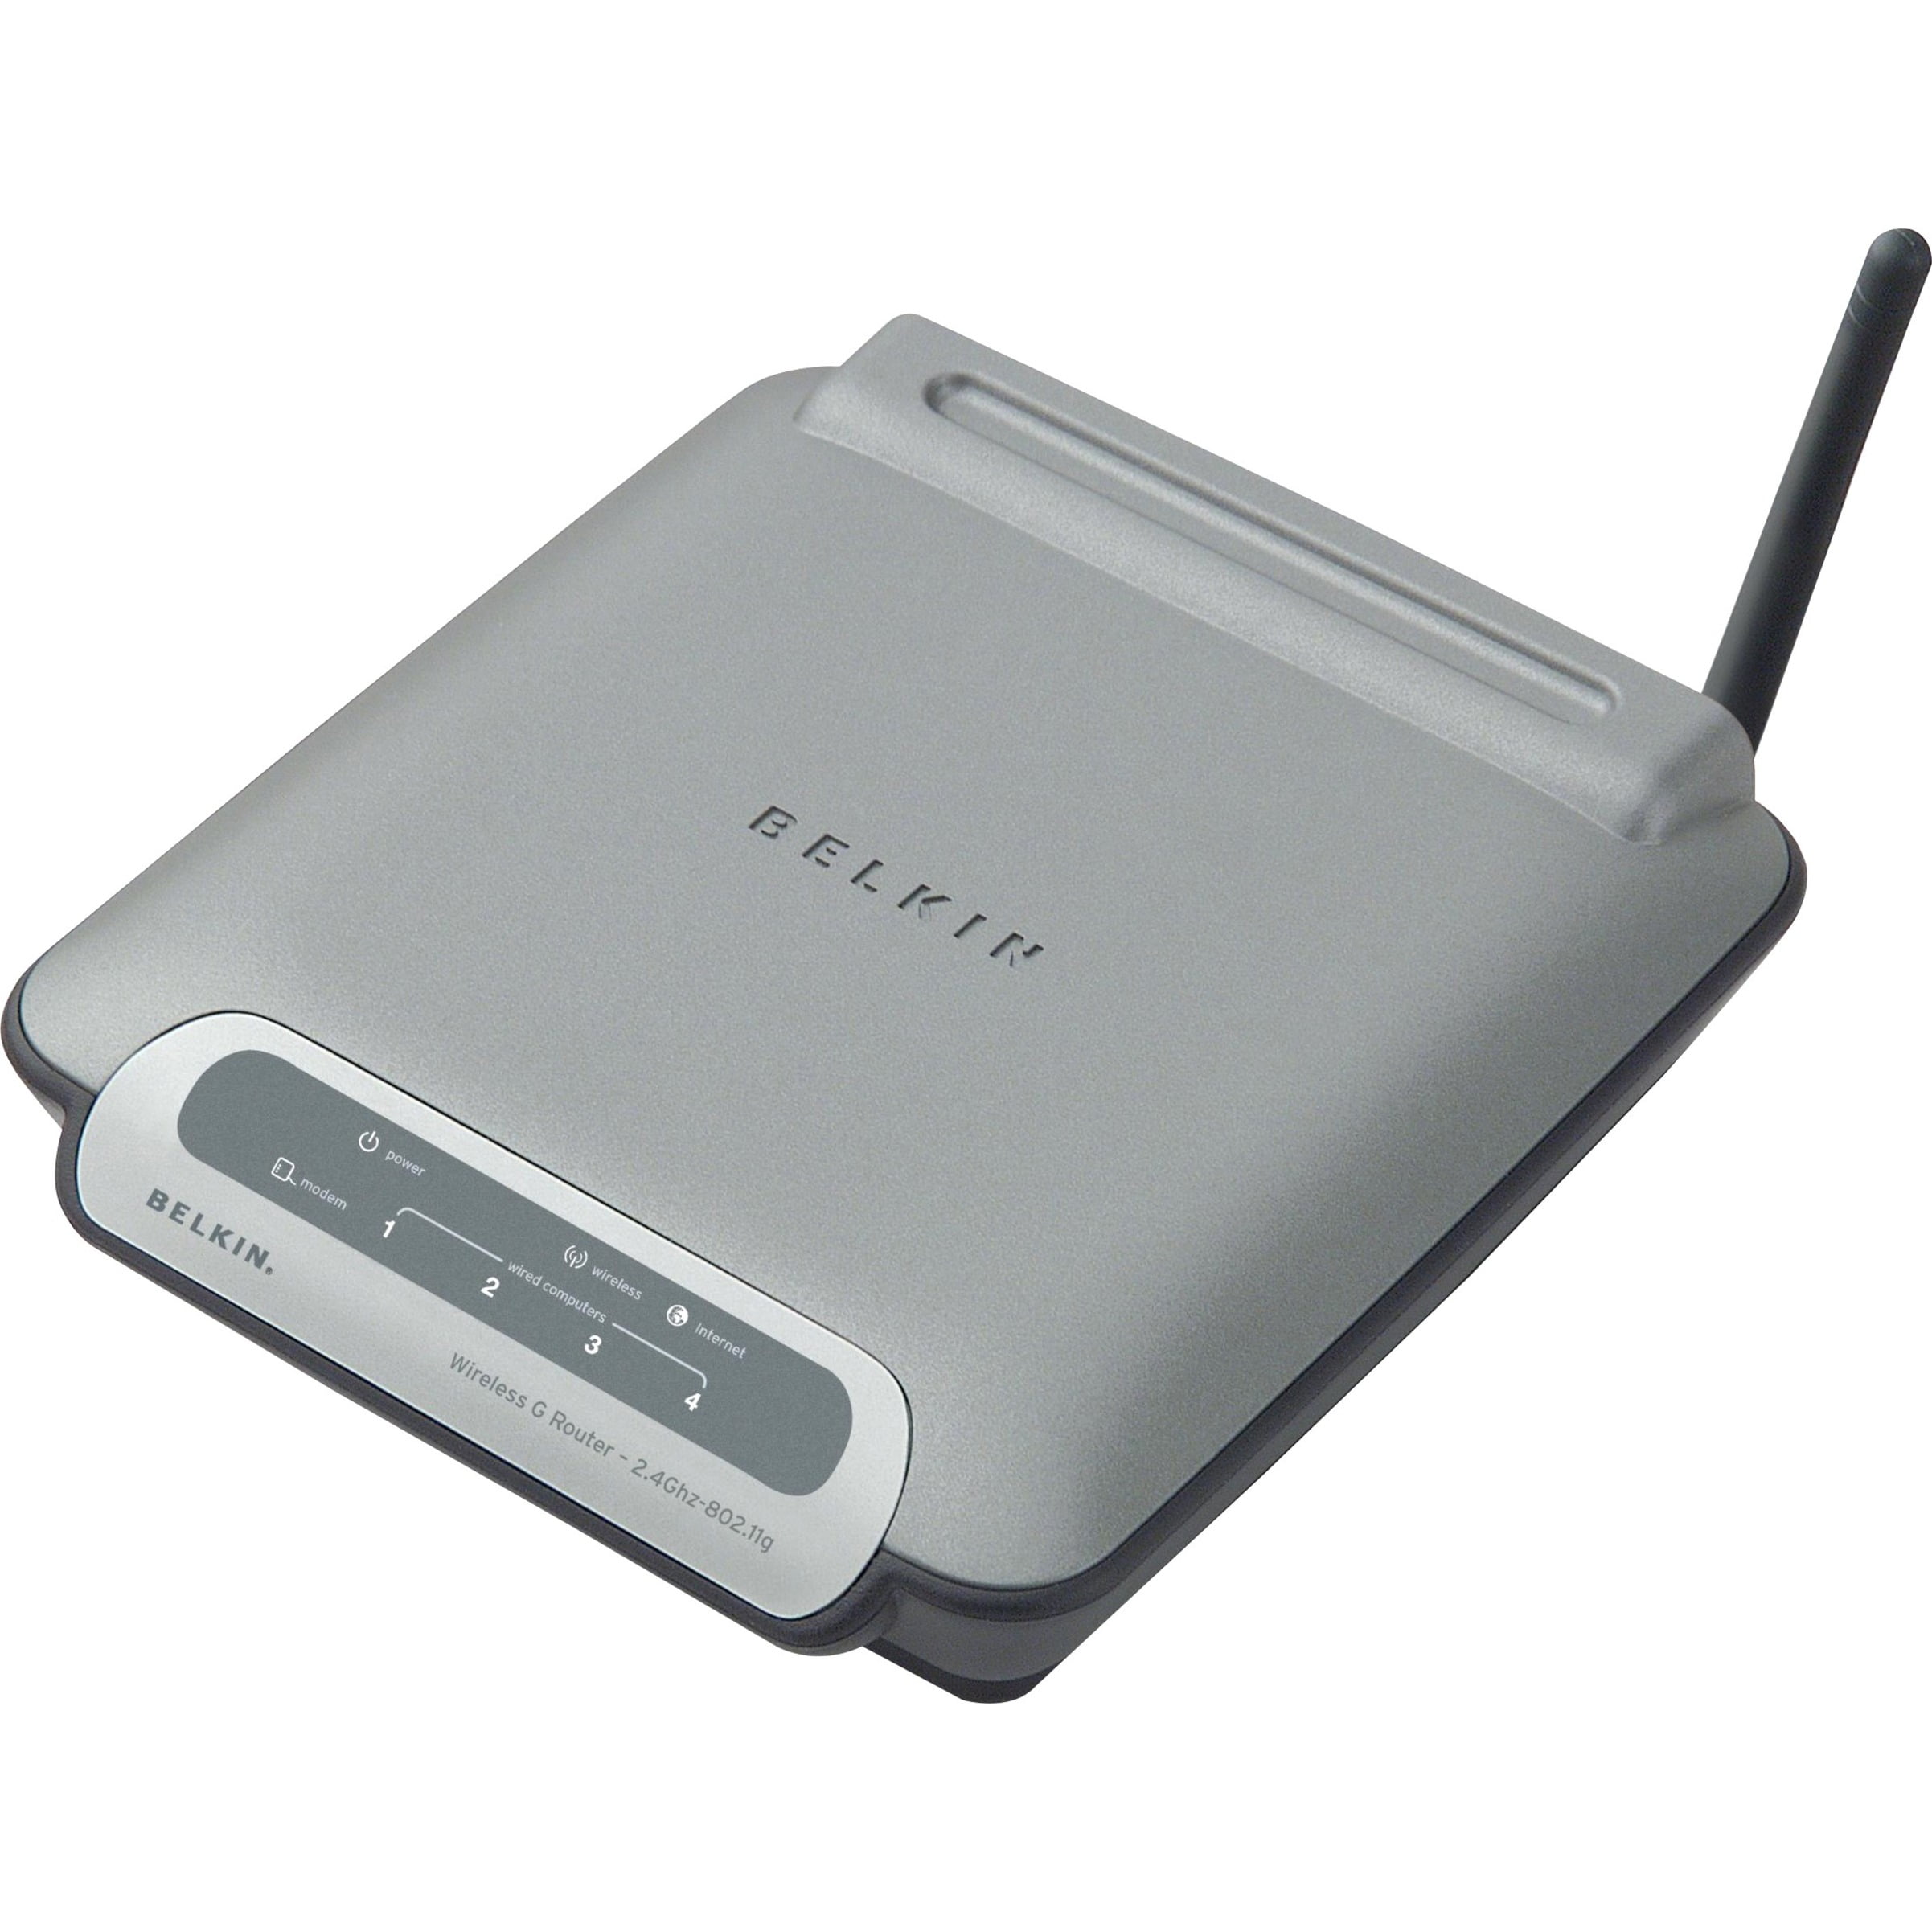 Купить недорогой хороший роутер. Belkin f5u279. Belkin easy transfer (f5u279). Belkin n Wireless Router. Роутер Wireless 802.11 n/3g Router с сим картой.